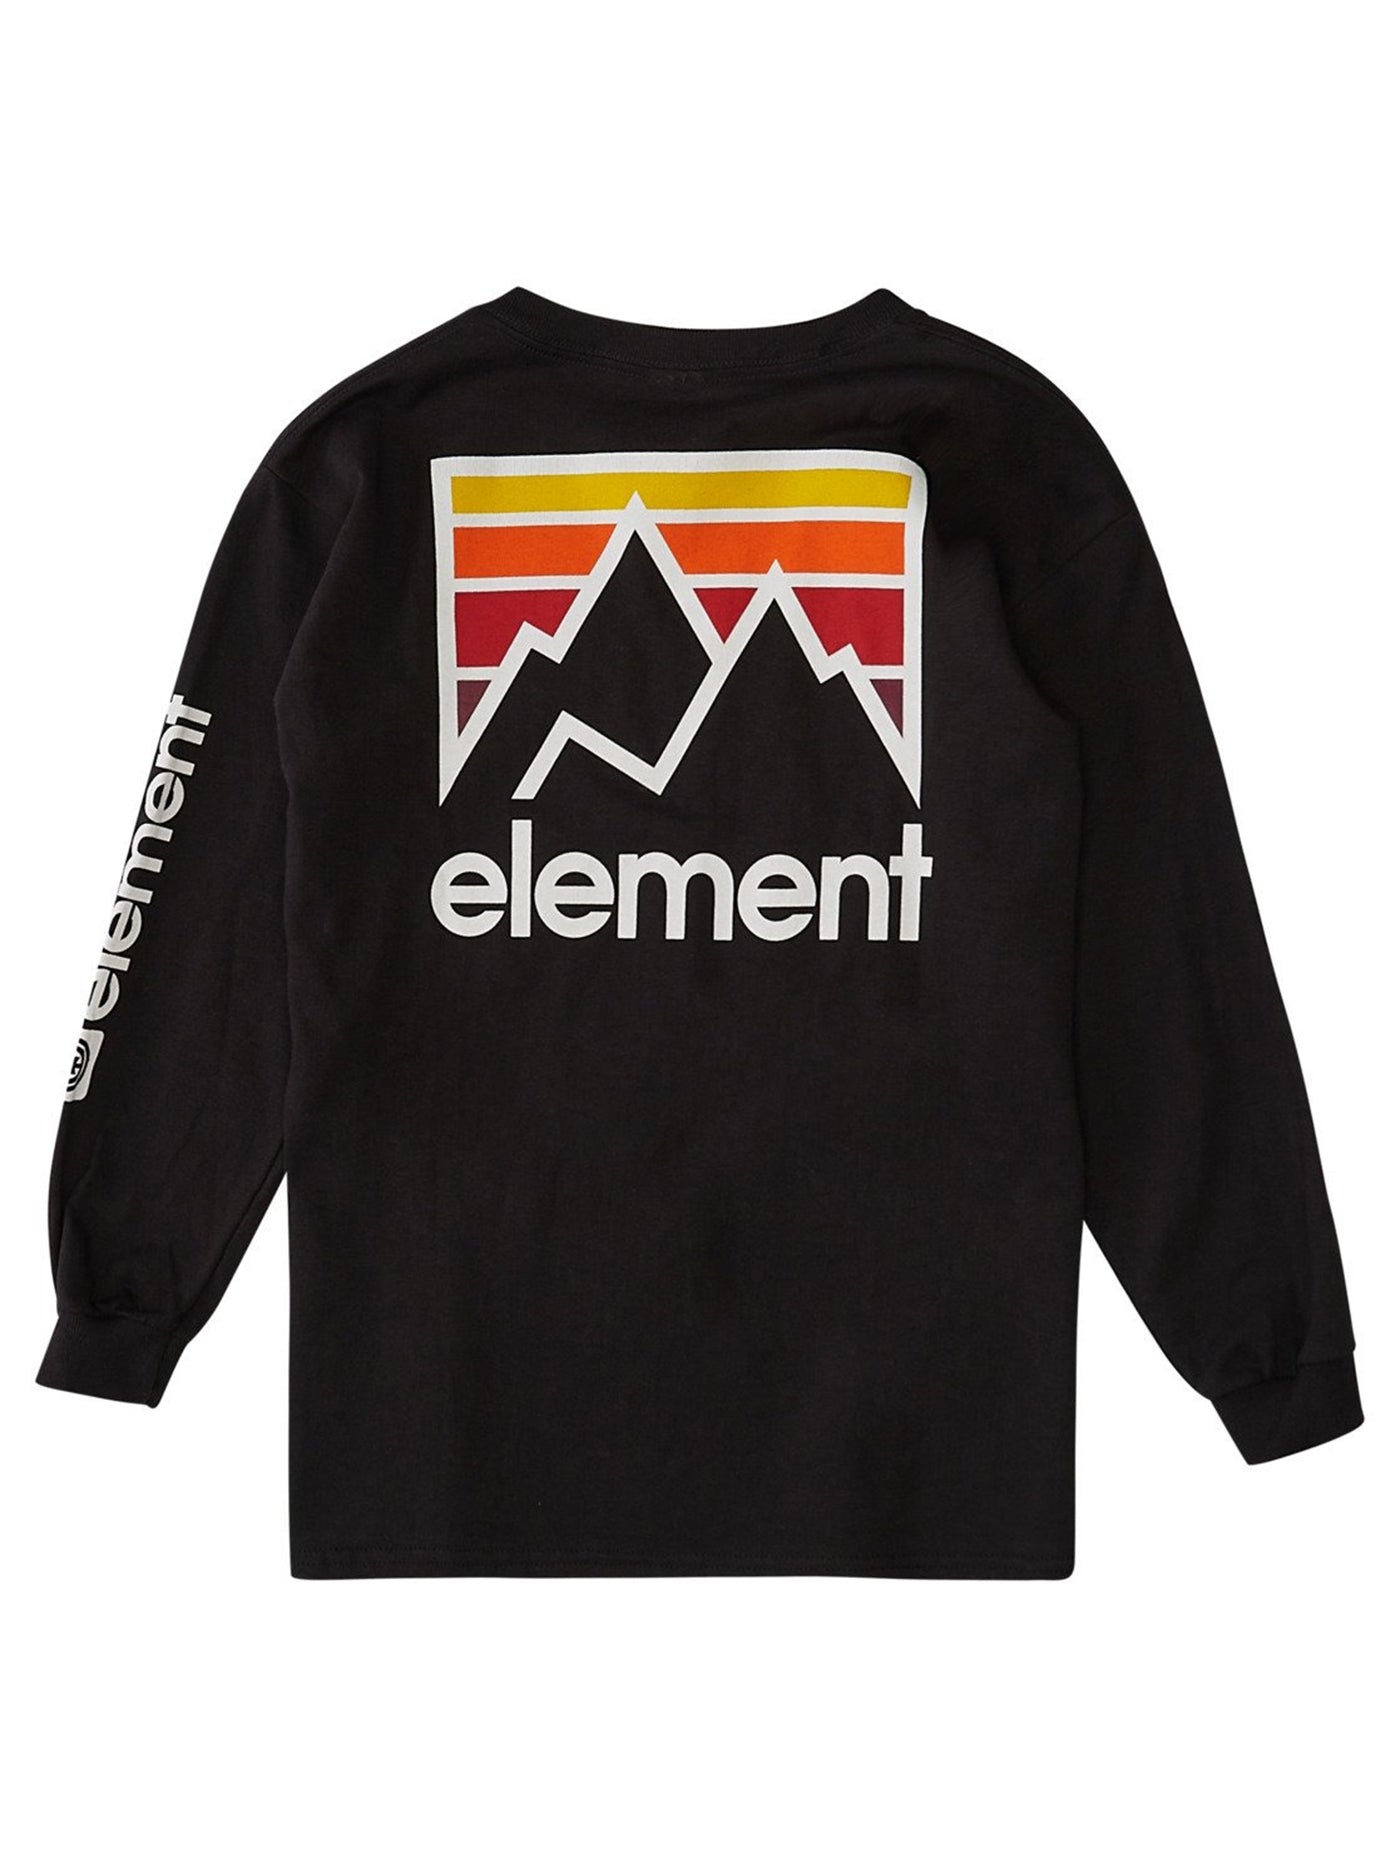 Element Joint Long Sleeve T-Shirt